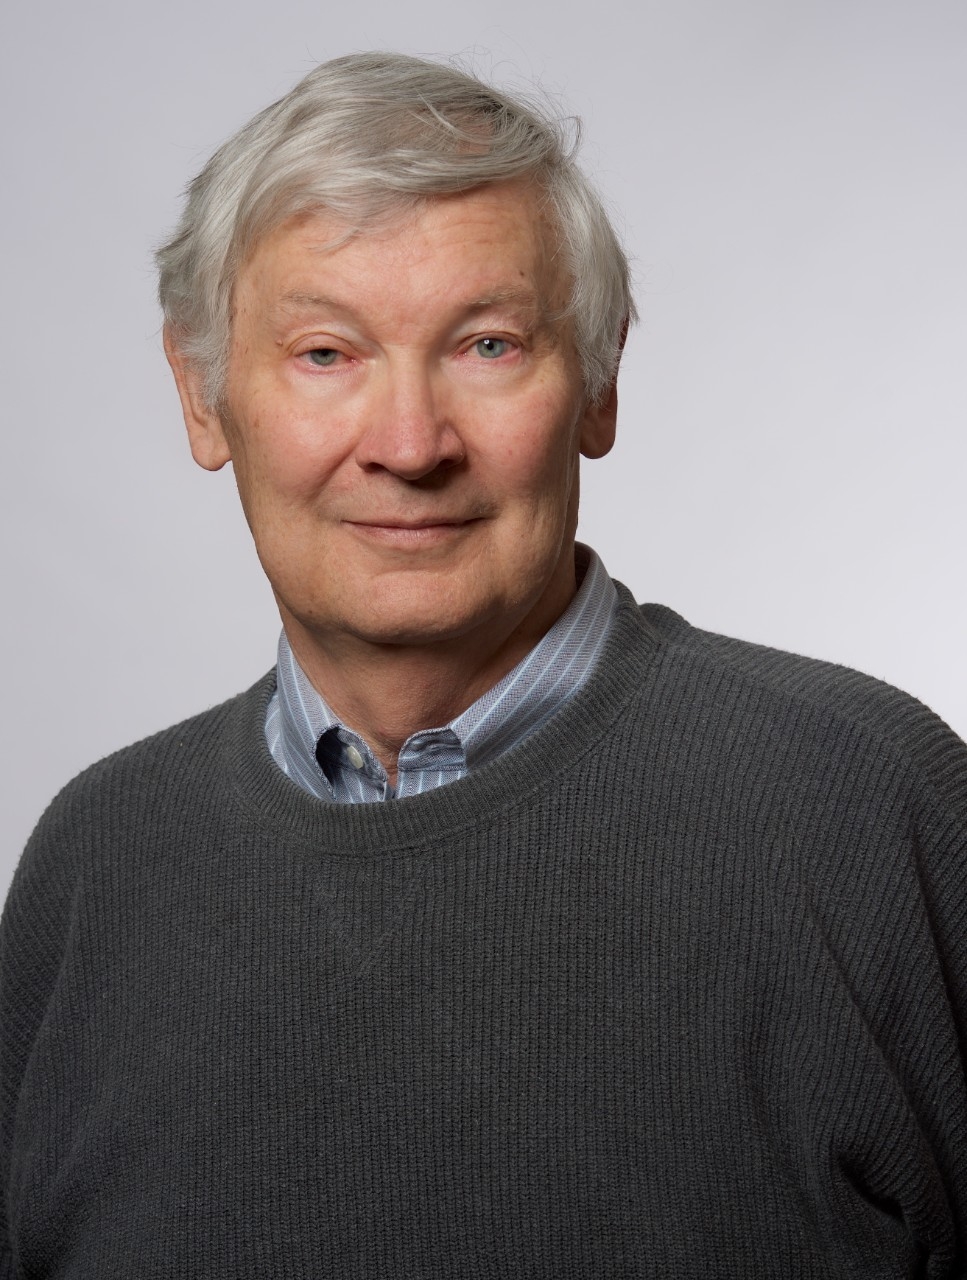 Professor Dennis Honabach